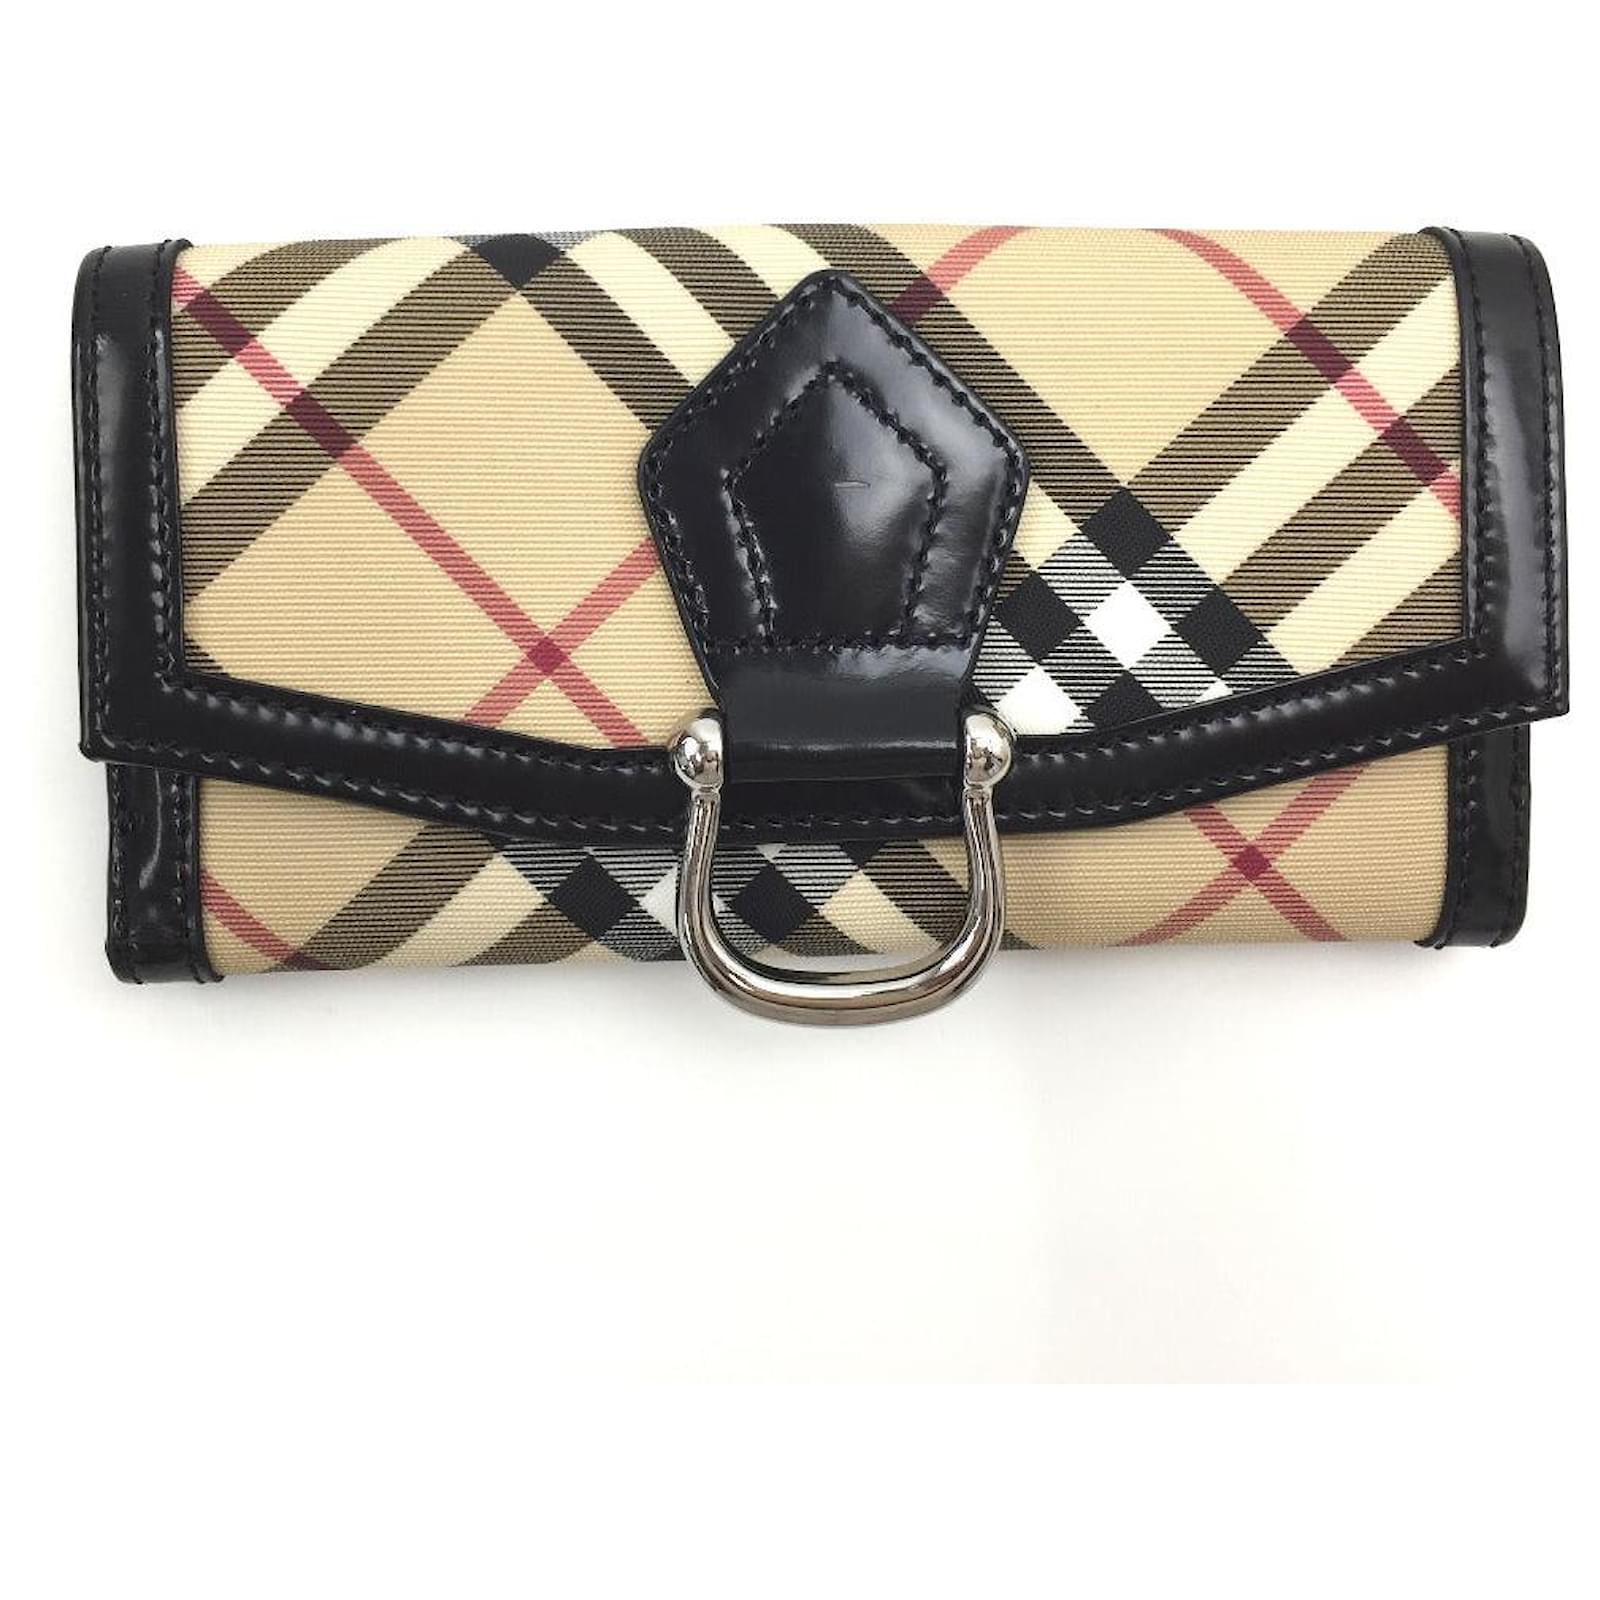 Burberry Authentic Nova Check Women's Leather Wallet 